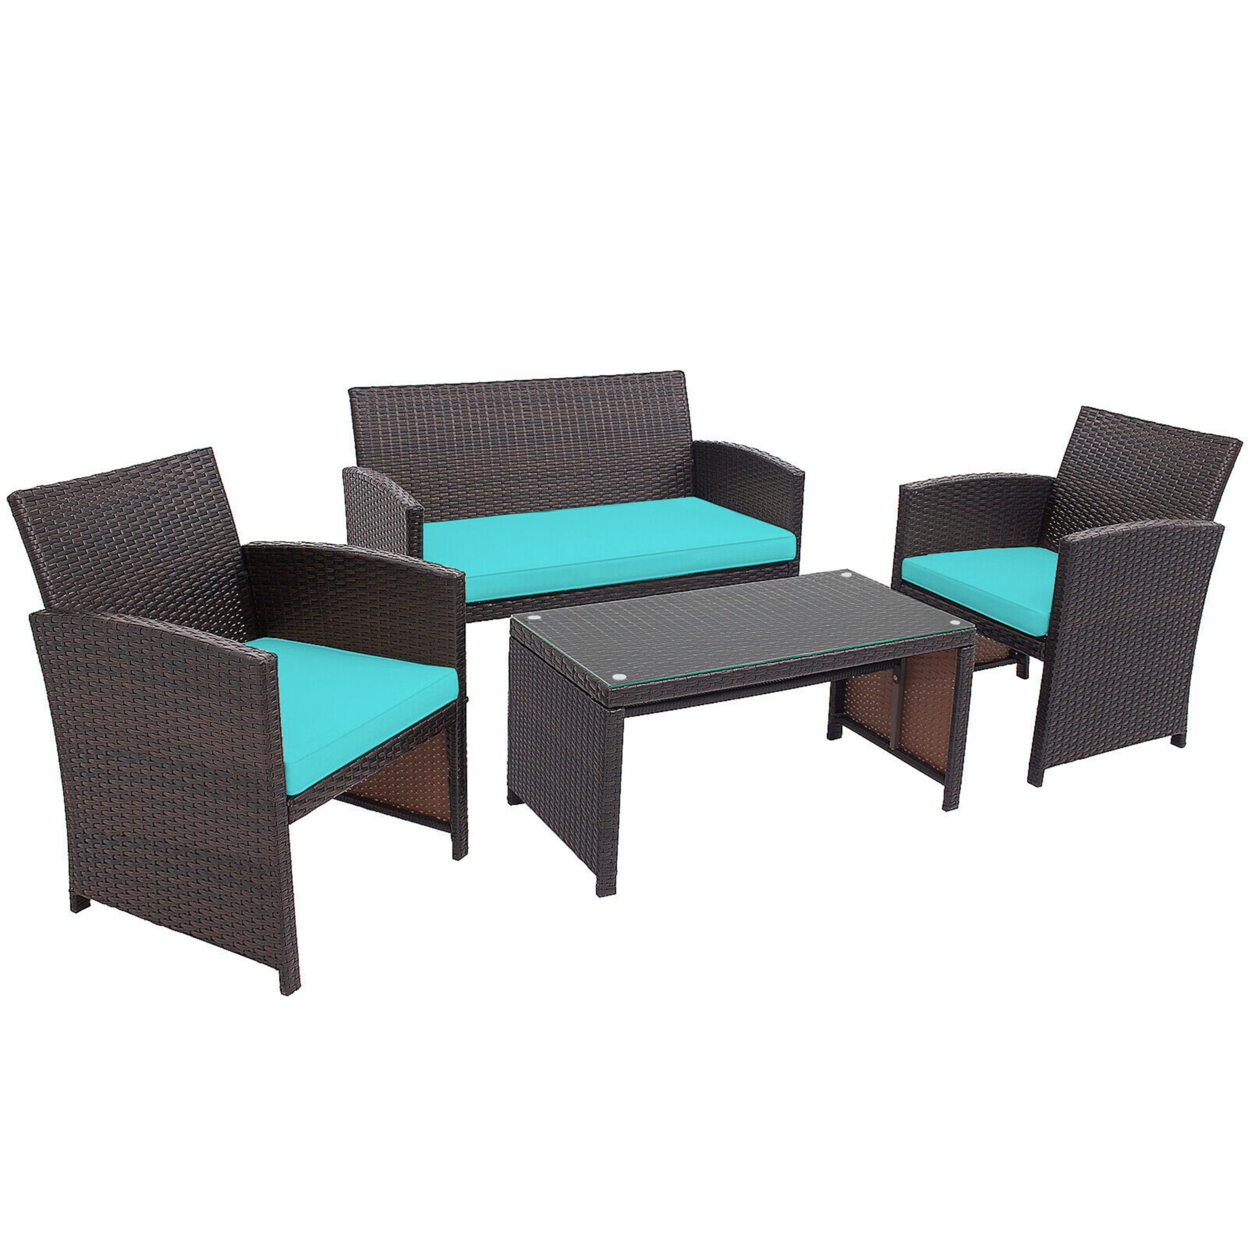 4PCS Patio Conversation Set Outdoor Rattan Furniture Set W/ Turquoise Cushions